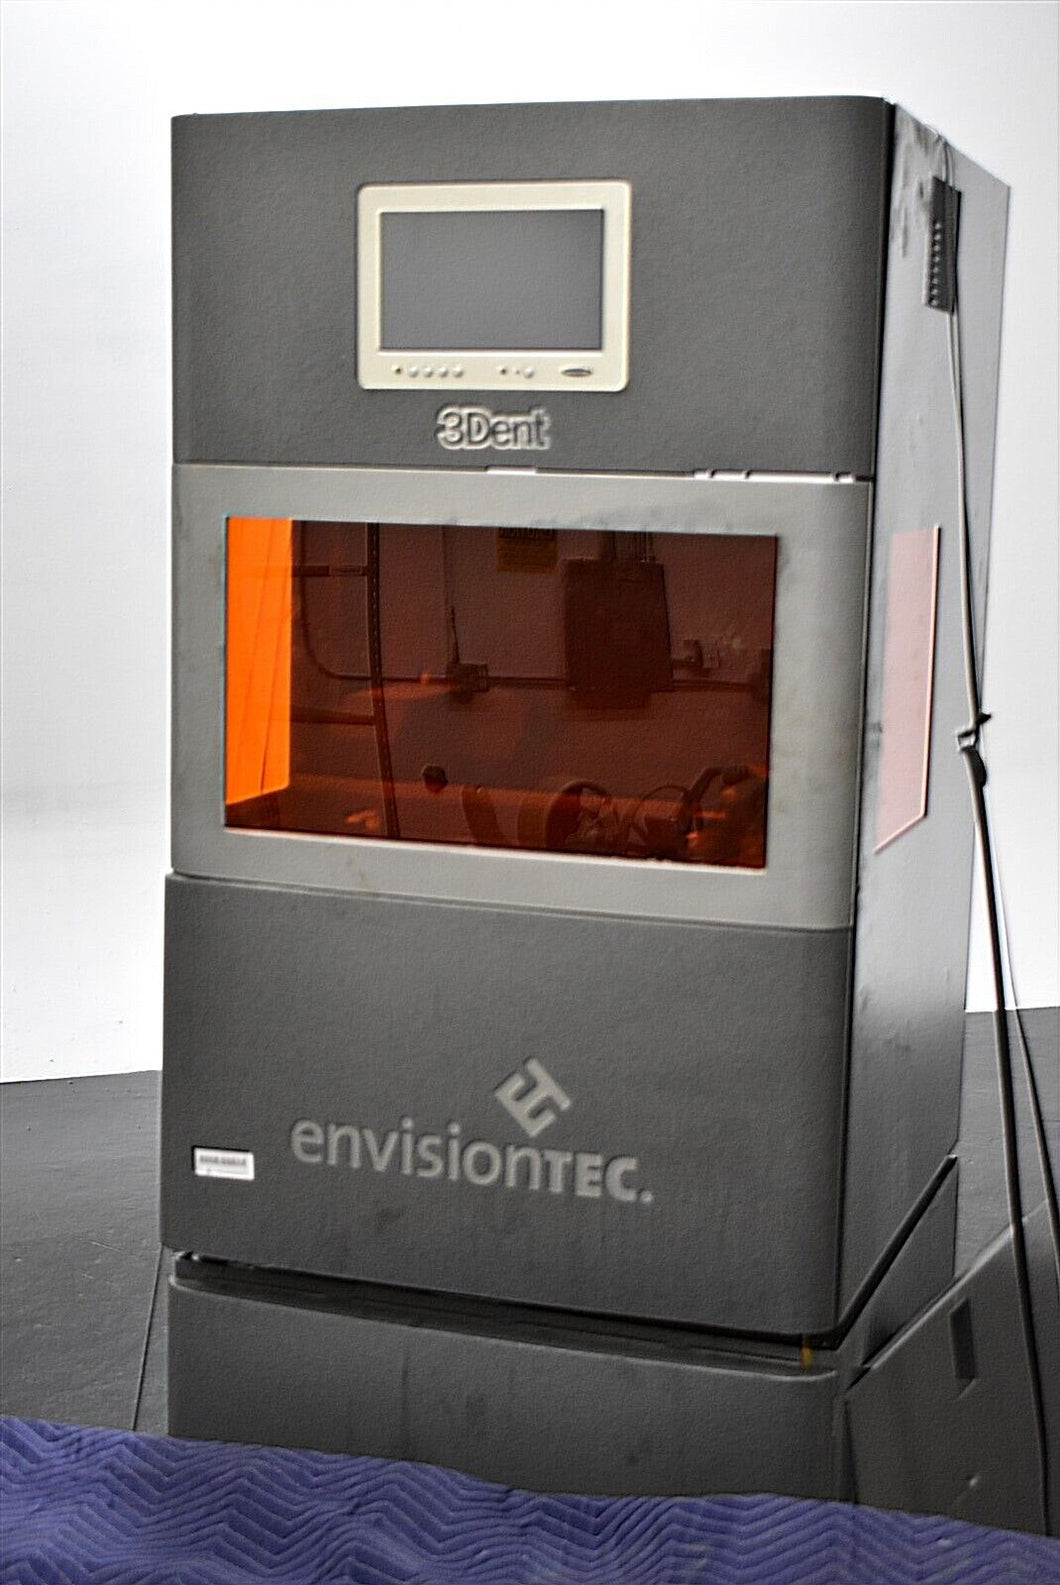 EnvisionTec 3Dent 3SP 3D Printer Dental Equipment Unit Machine FOR PARTS/REPAIR